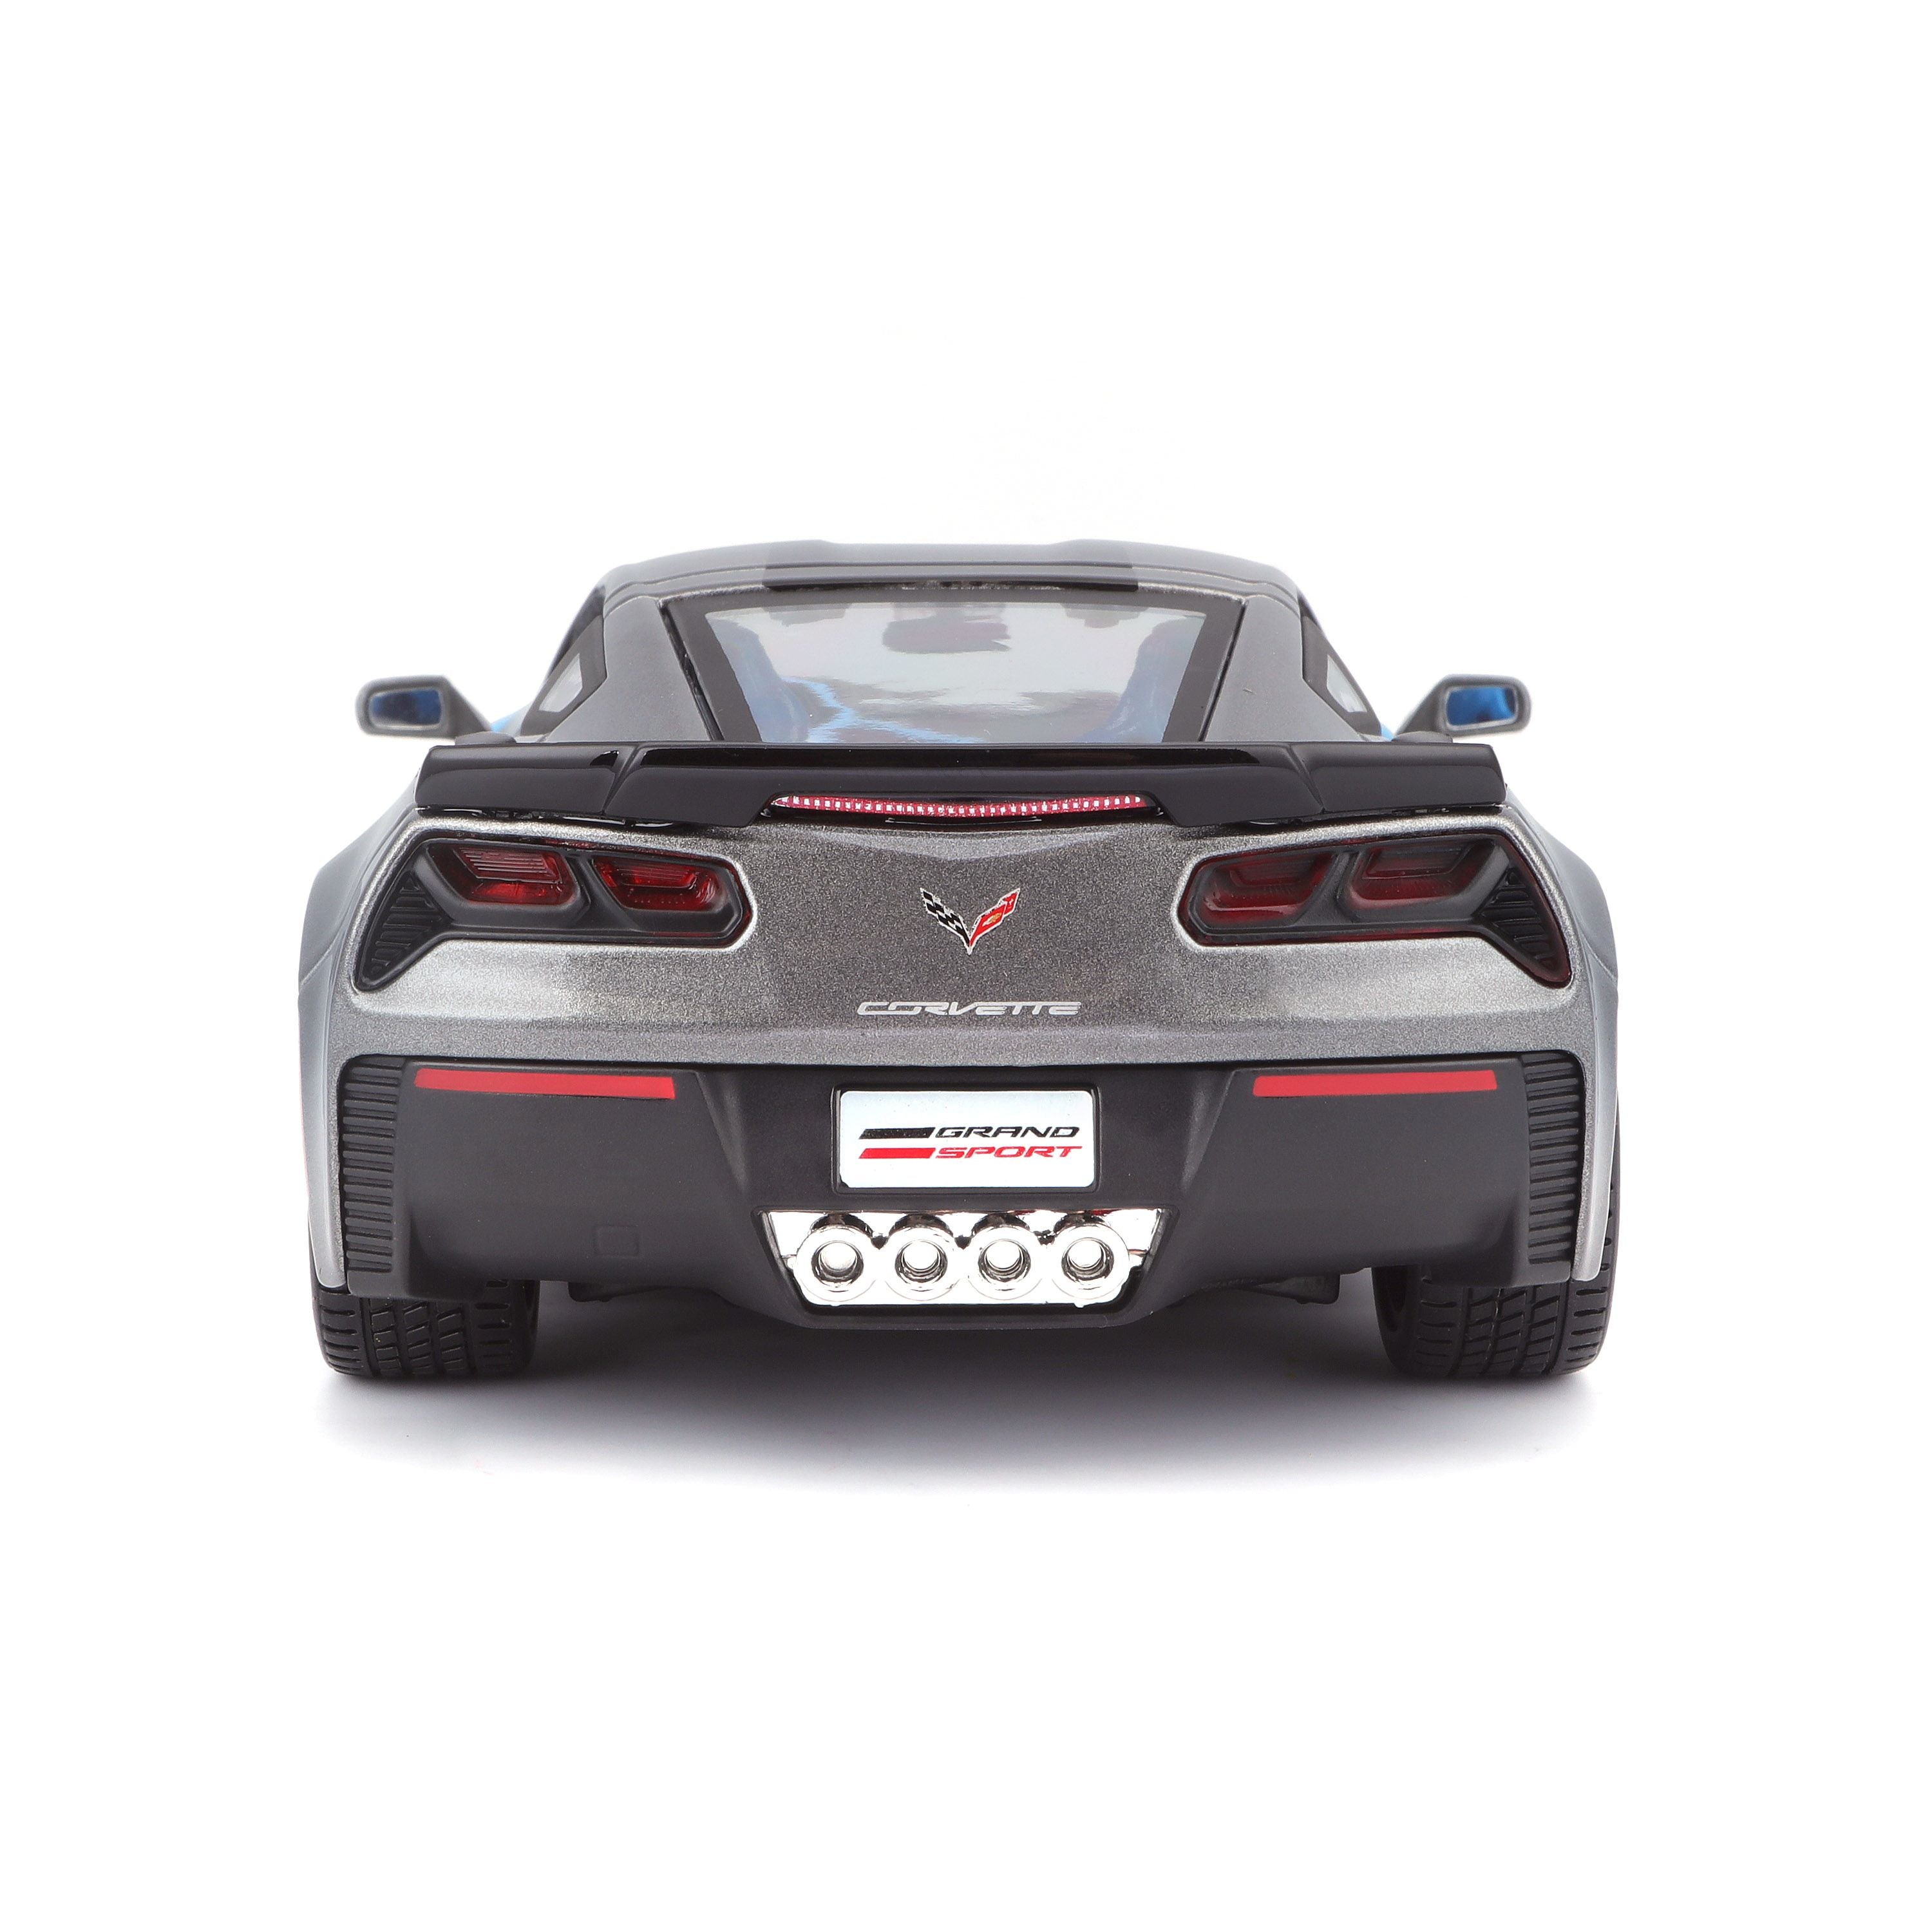 10-31516 GY - Bburago Maisto - 1:24 - 2017 Corvette Grand Sport - Grigio Met.